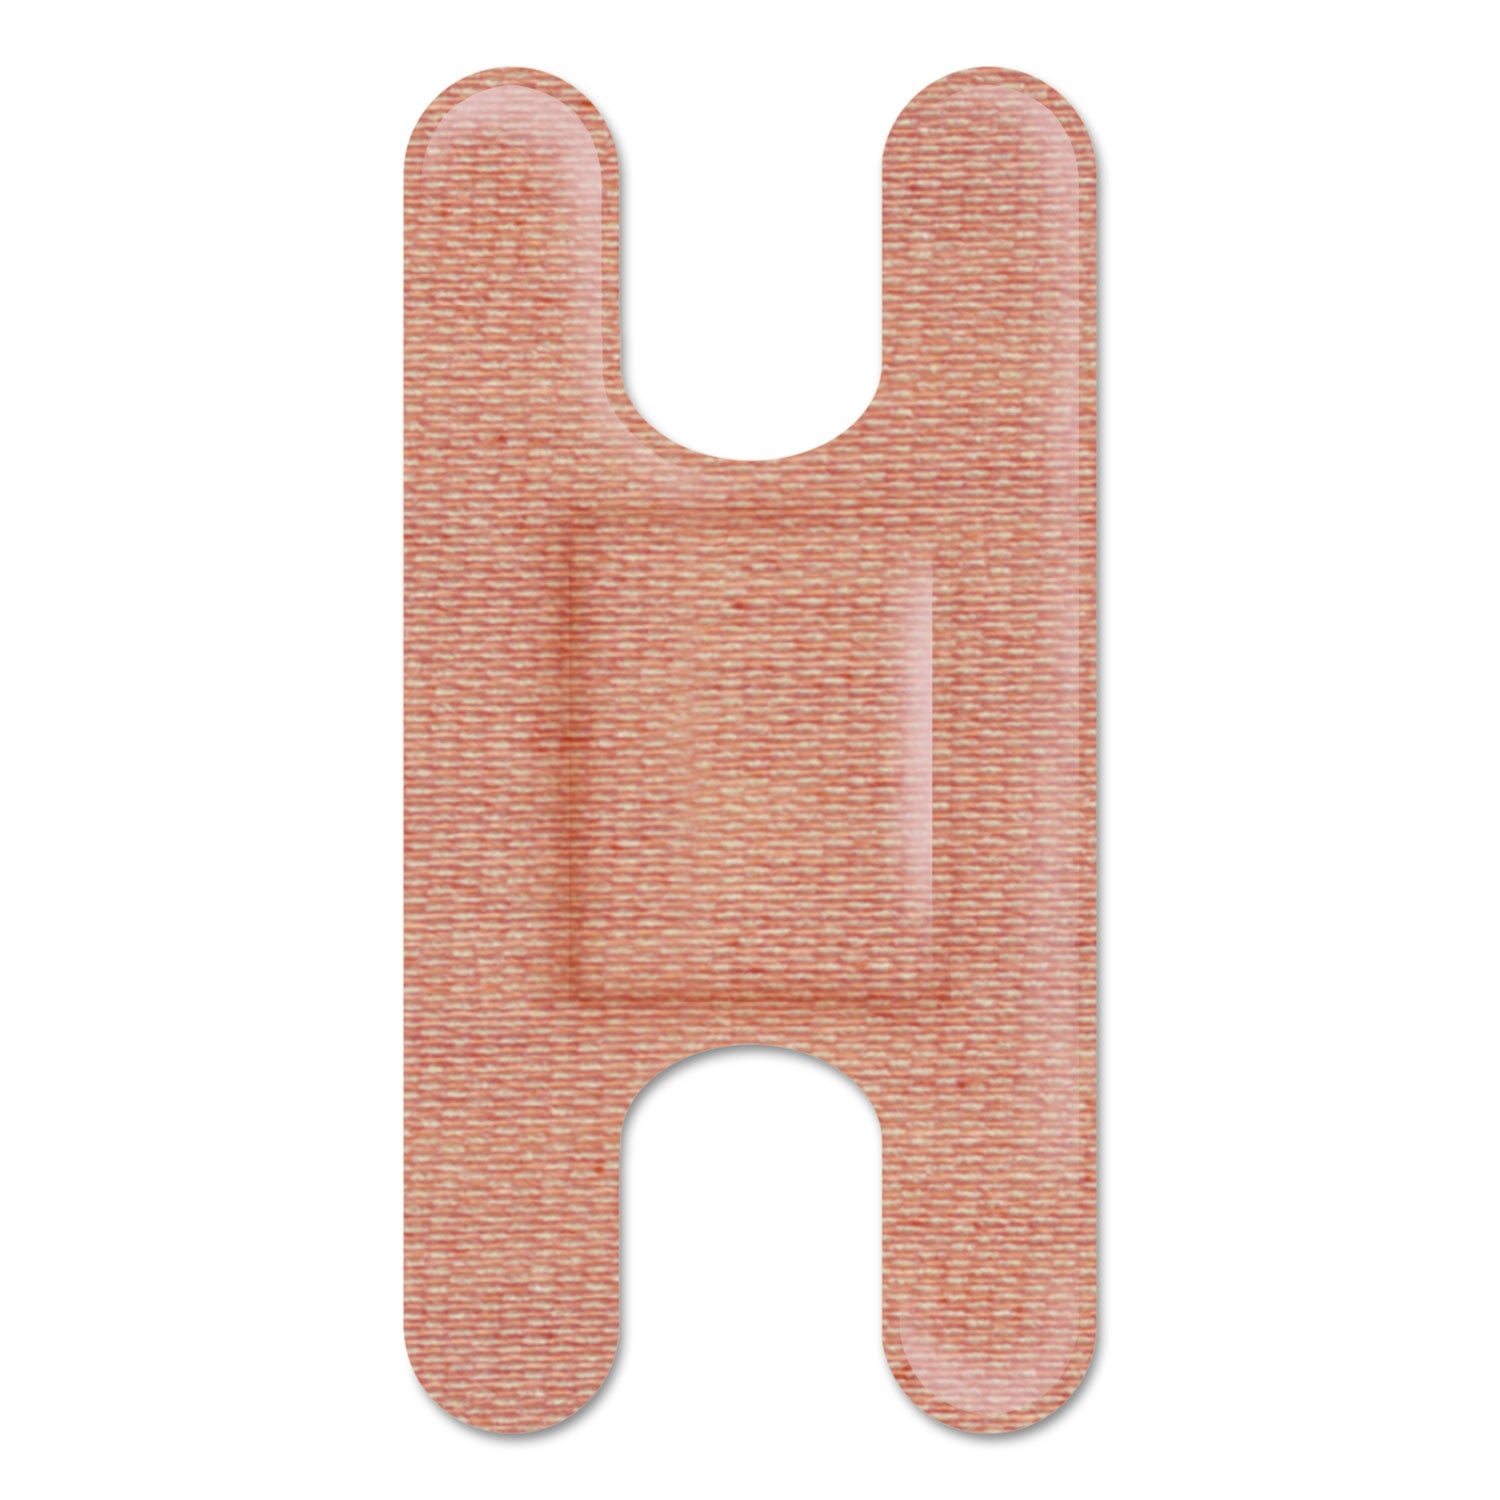 Flex Fabric Bandages, Knuckle, 1.5 x 3, 100/Box - 